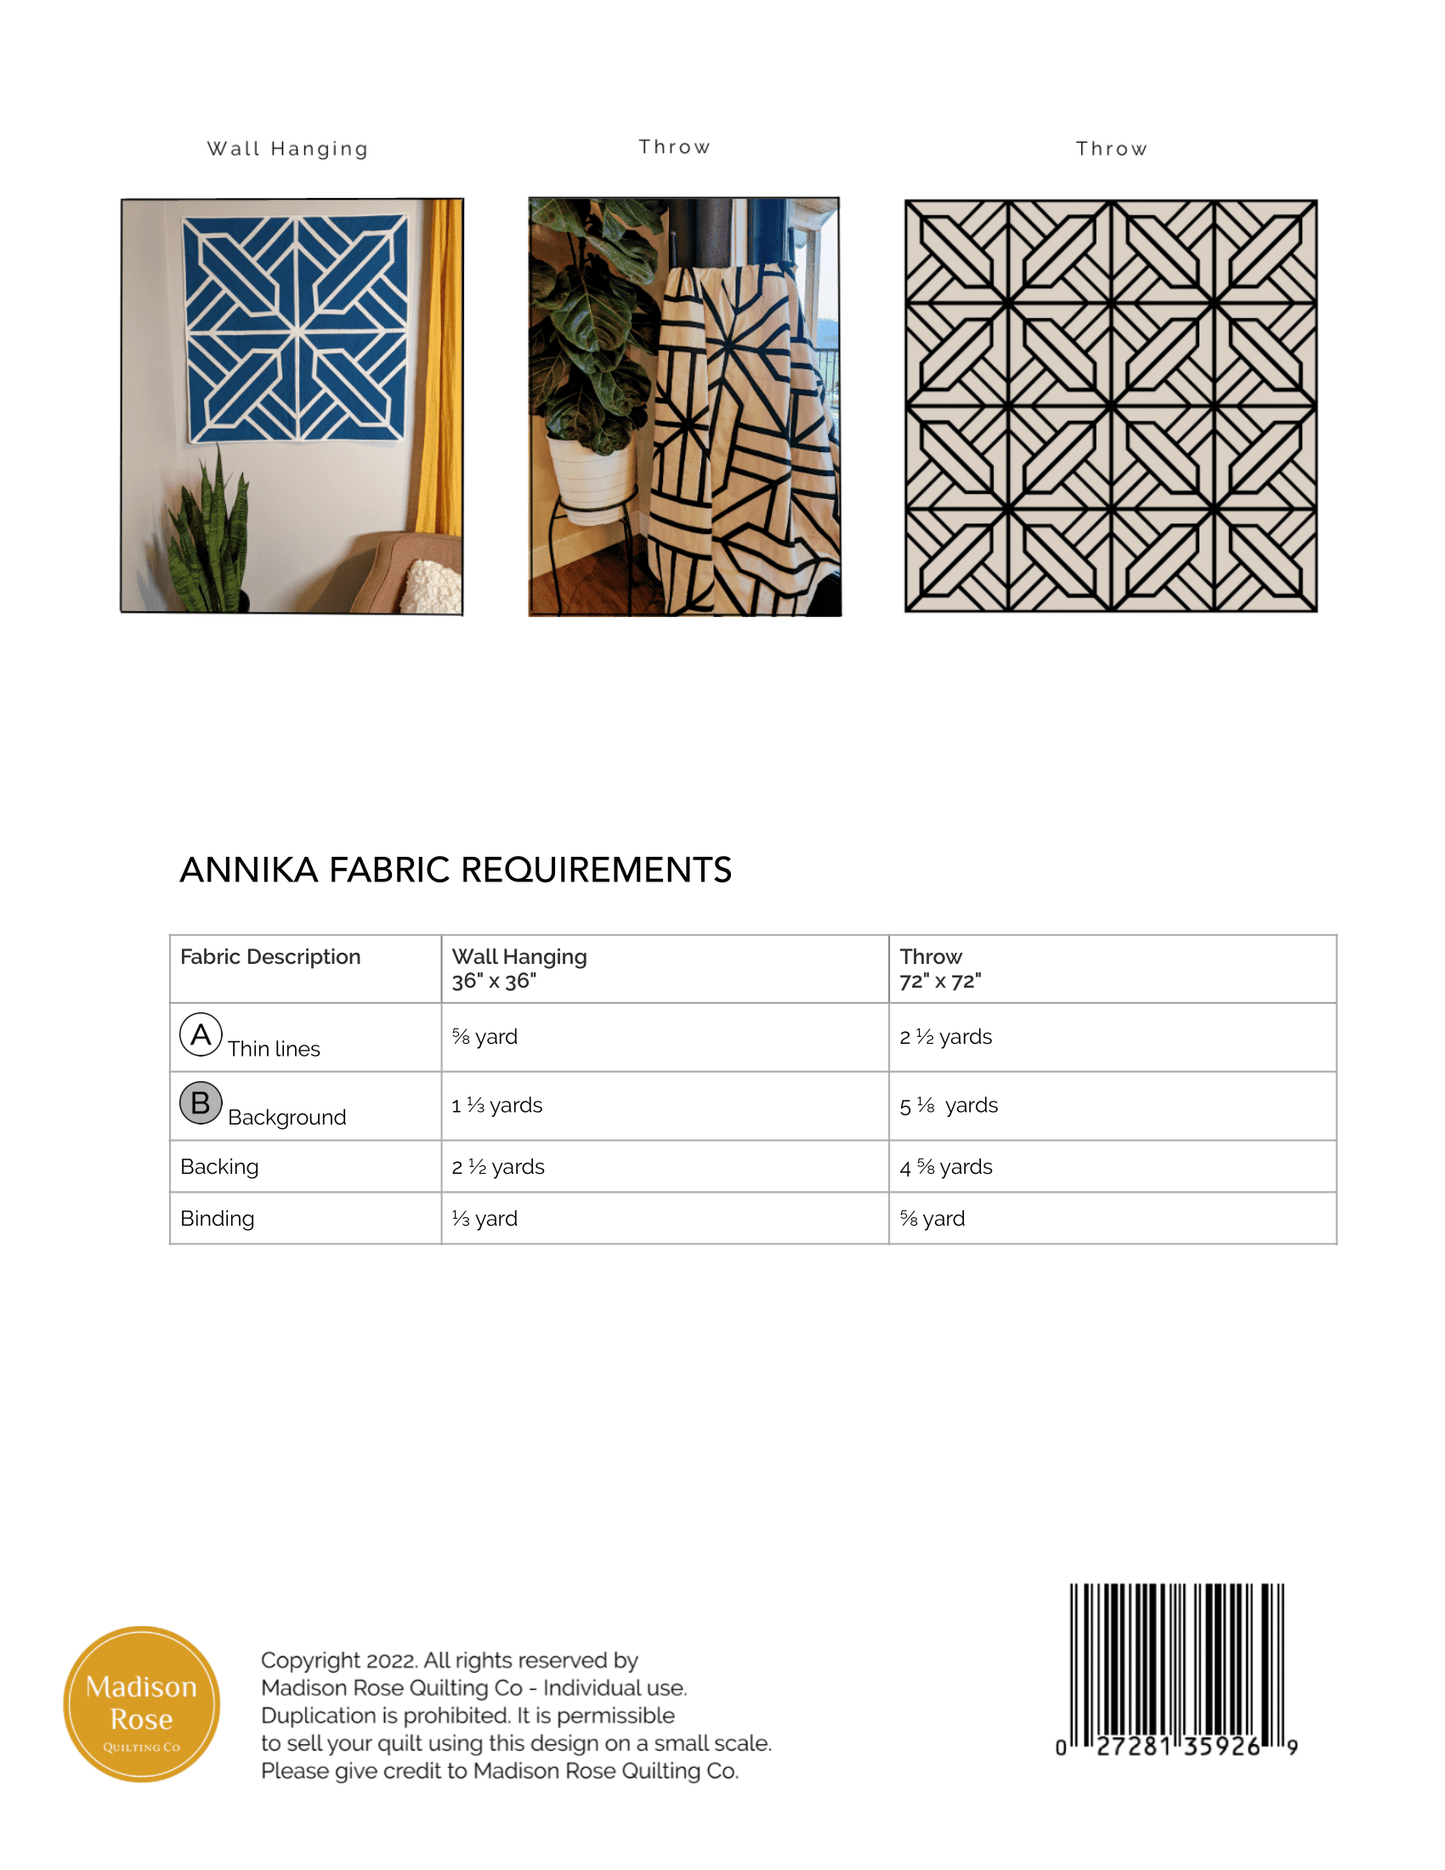 Annika Quilt Pattern - Pack of 3 - M110